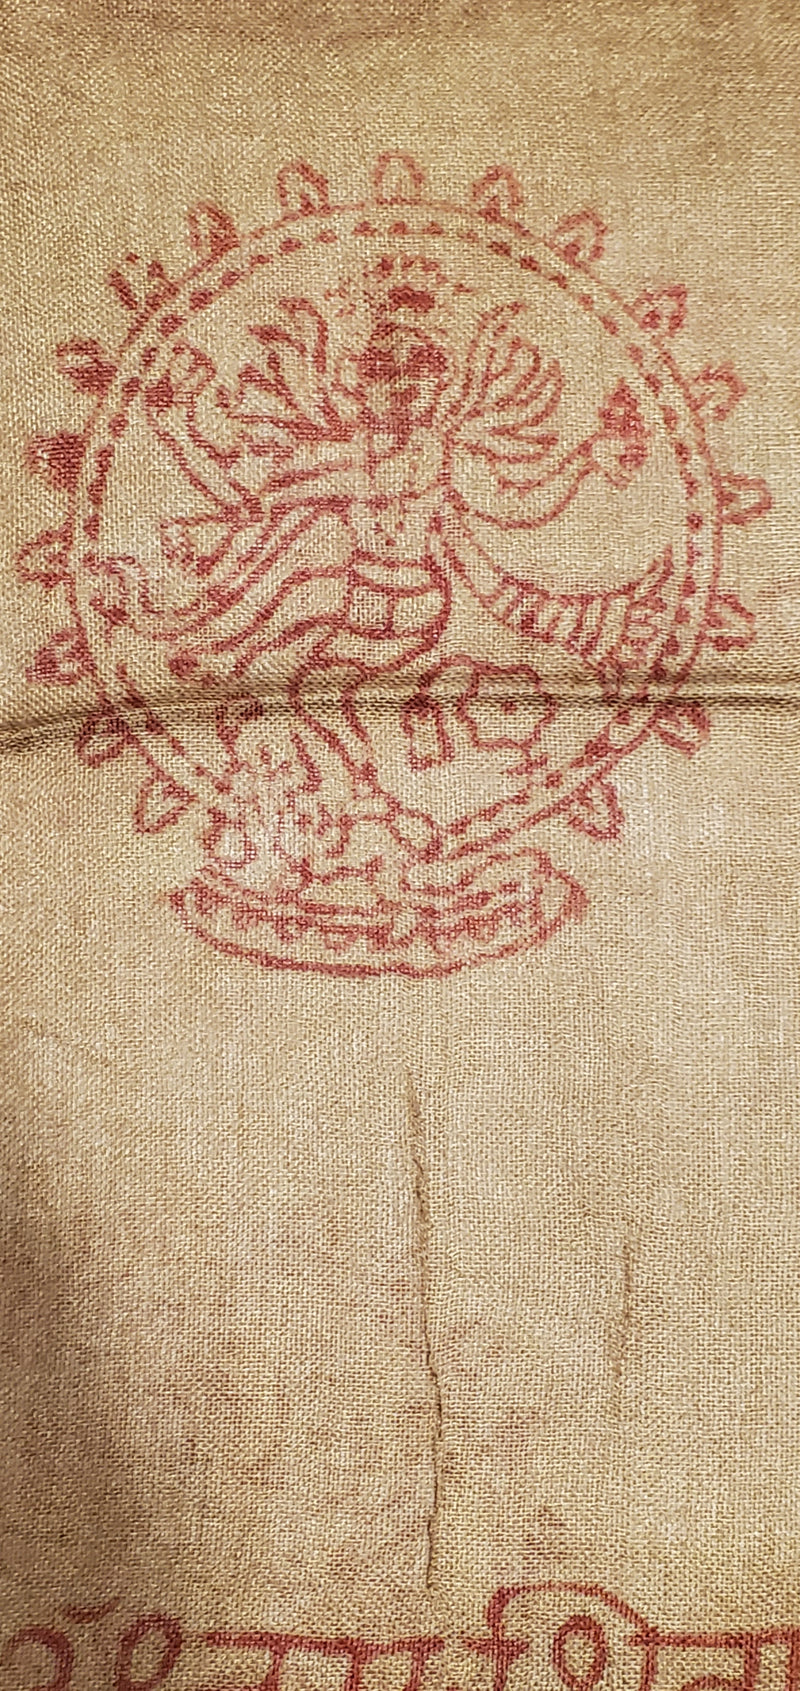 Brown Primordial Om & Asian Symbols Printed Scarf